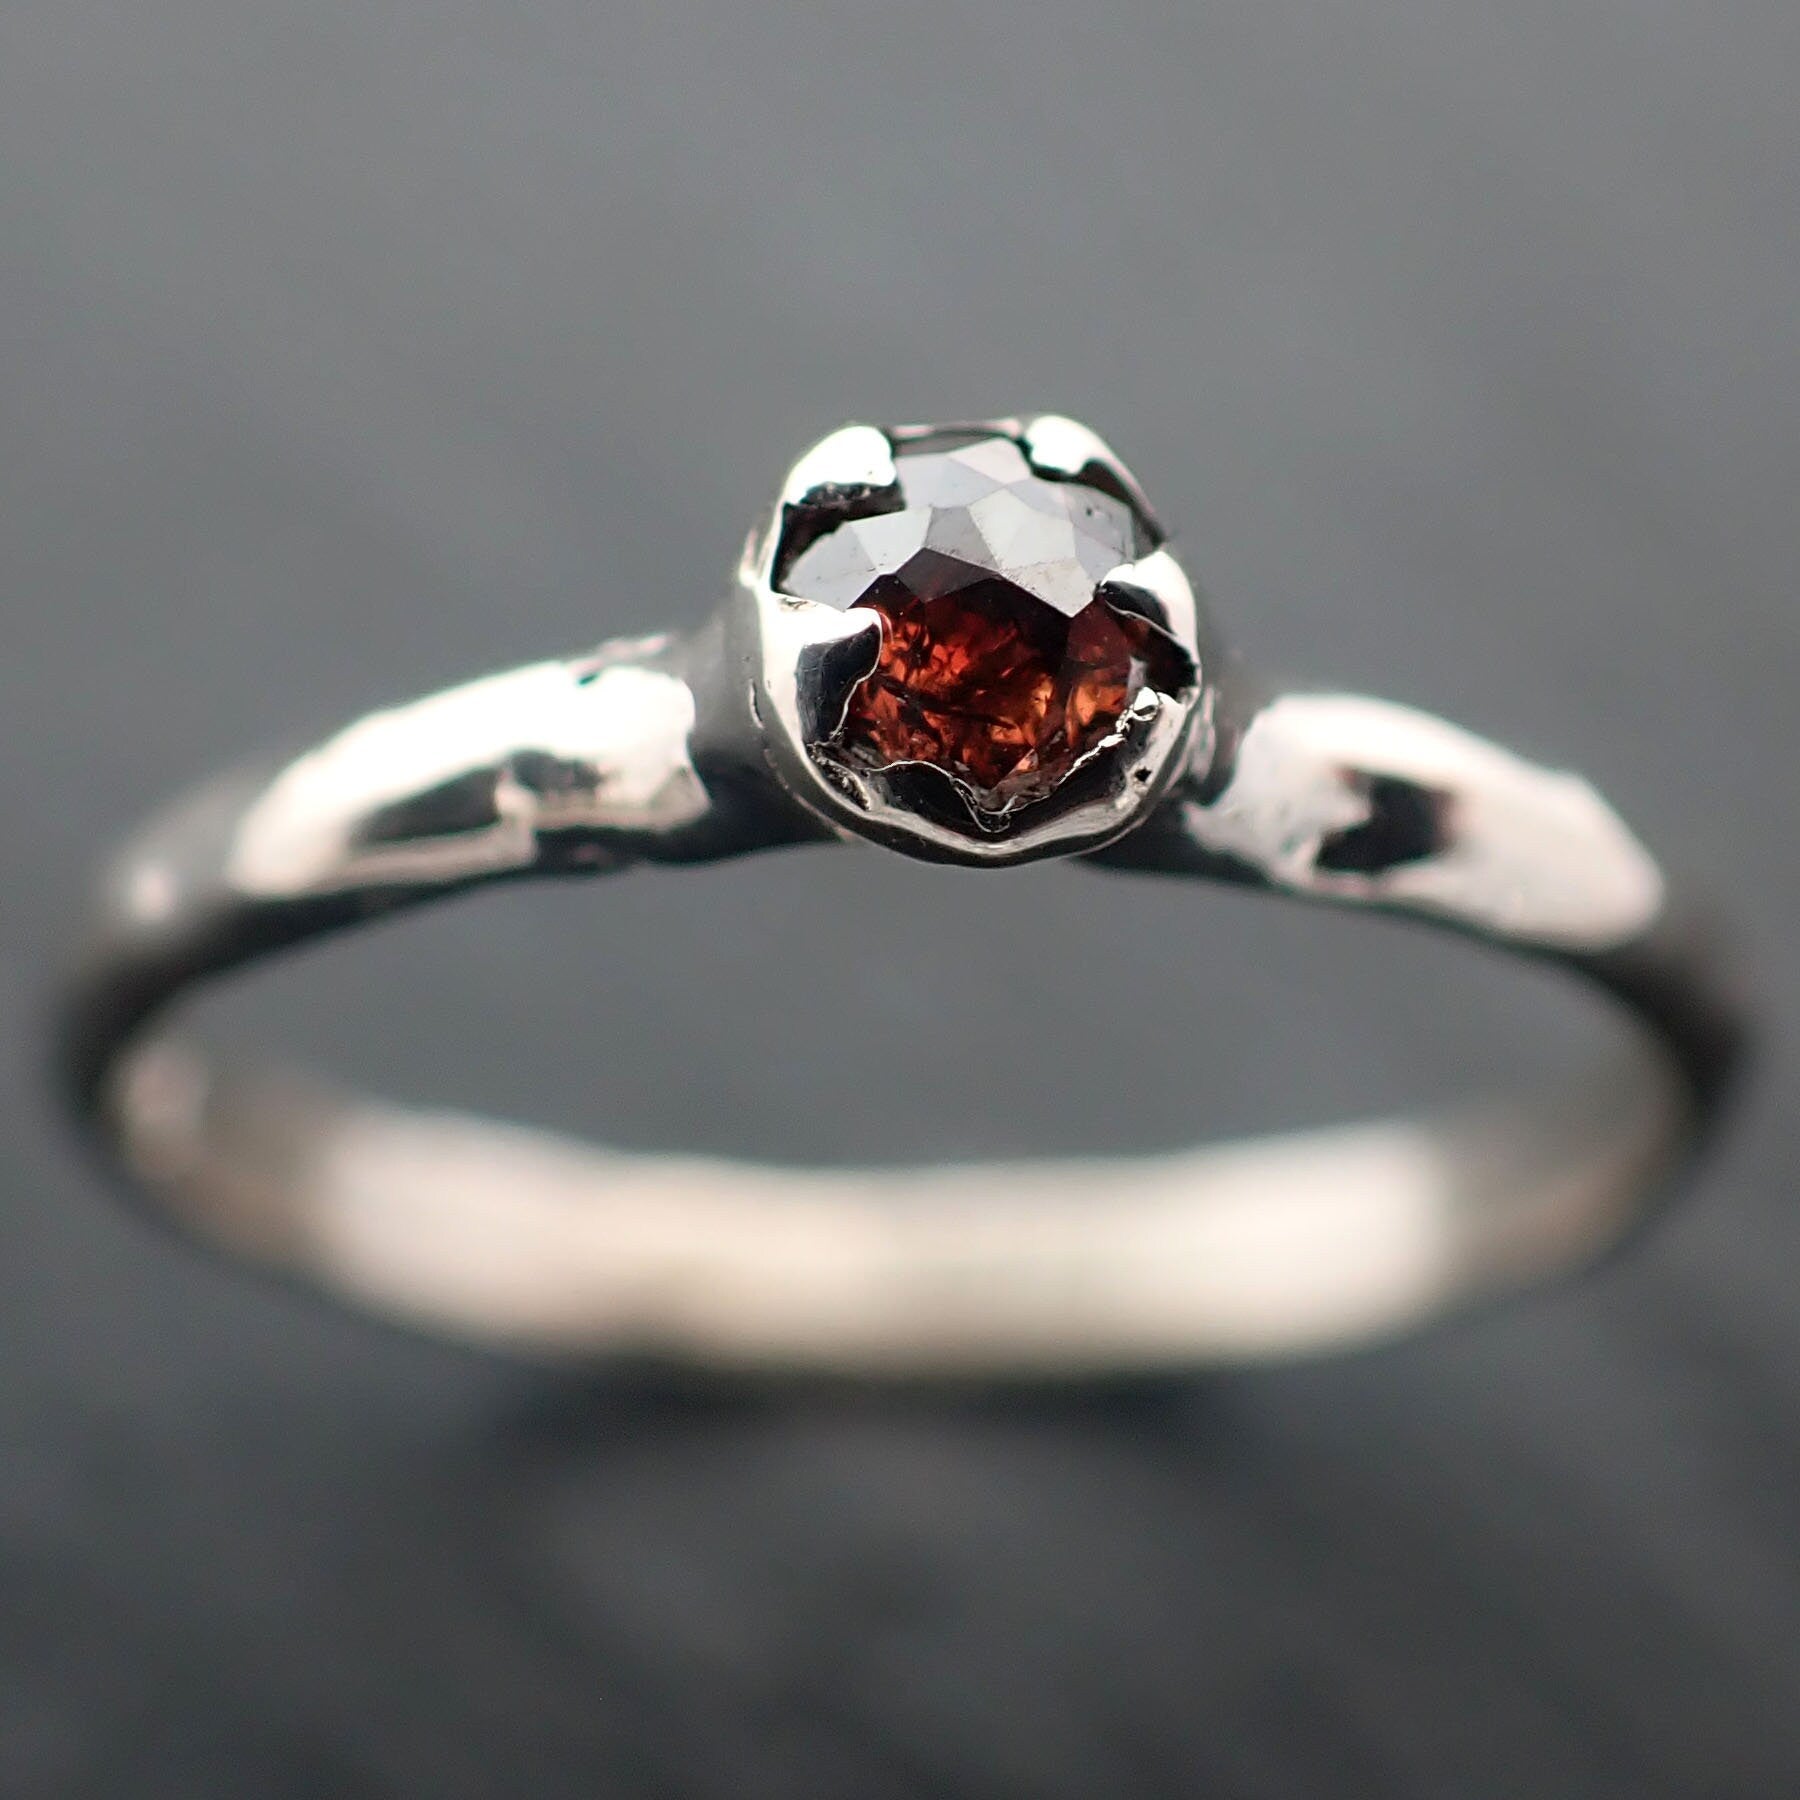 Fancy cut Coral orange Diamond Solitaire Engagement Ring 14k White Gold Rough Diamond ring byAngeline 3498